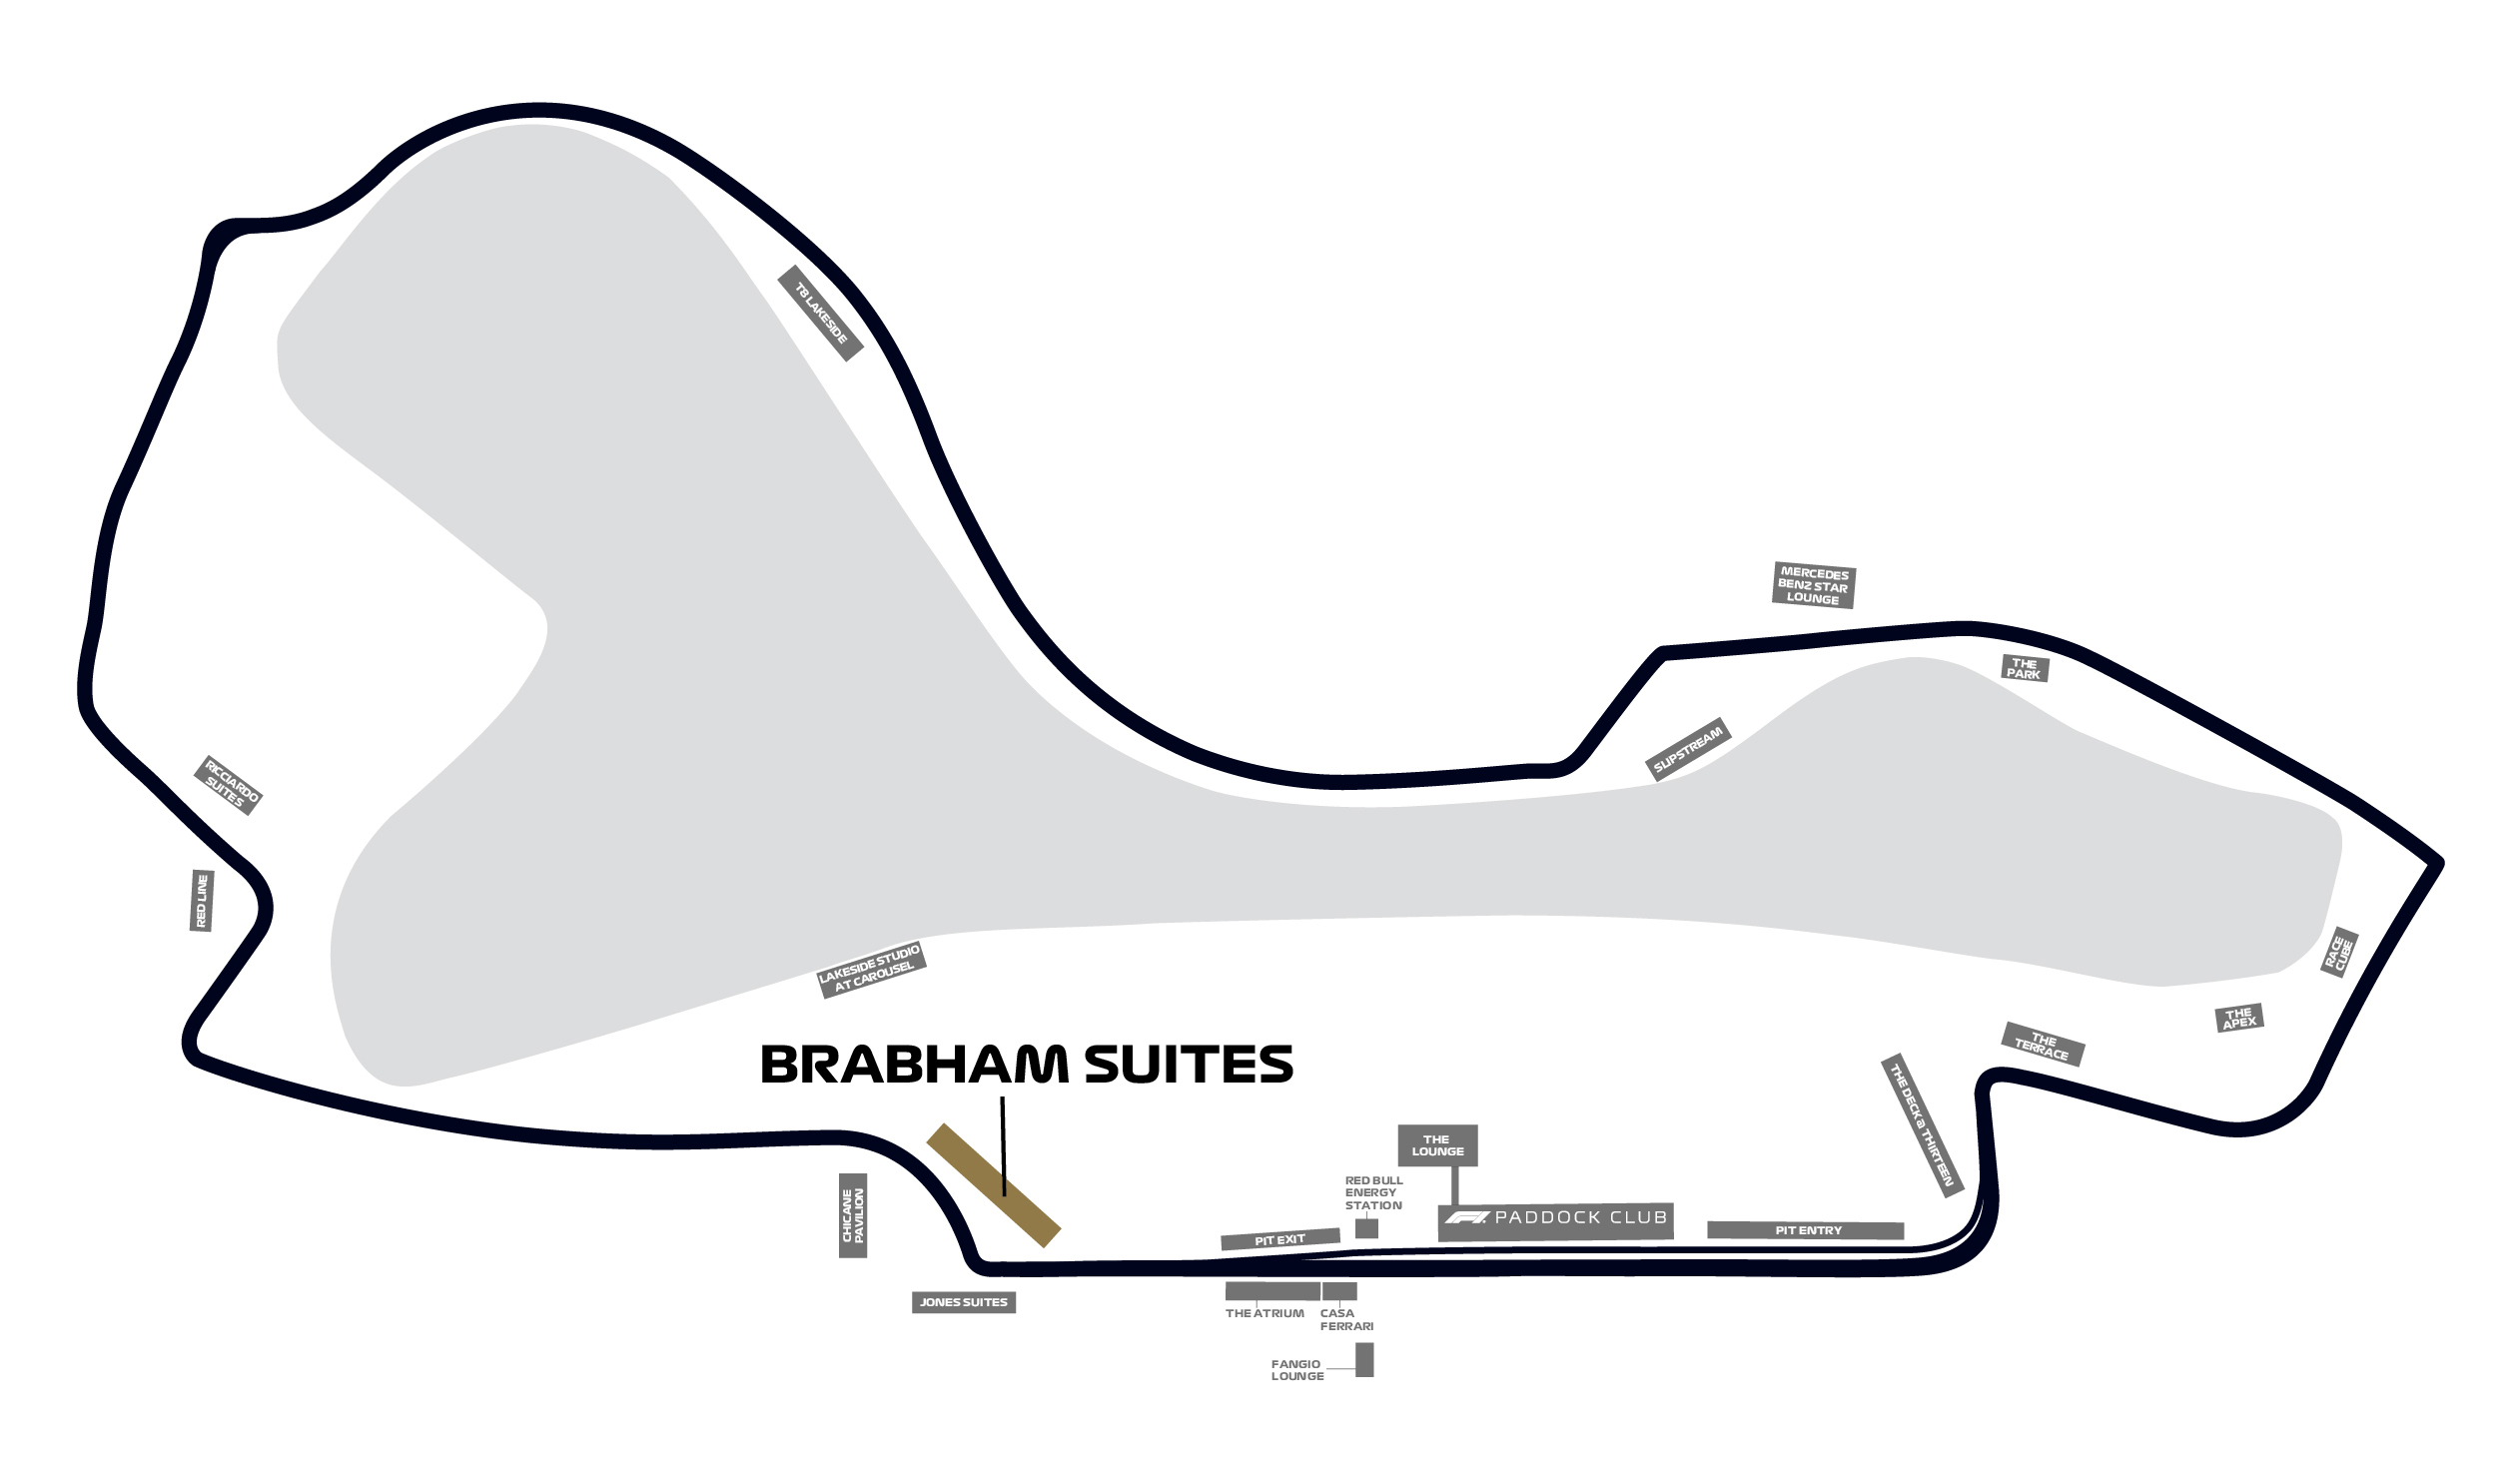 Map of Brabham Suites